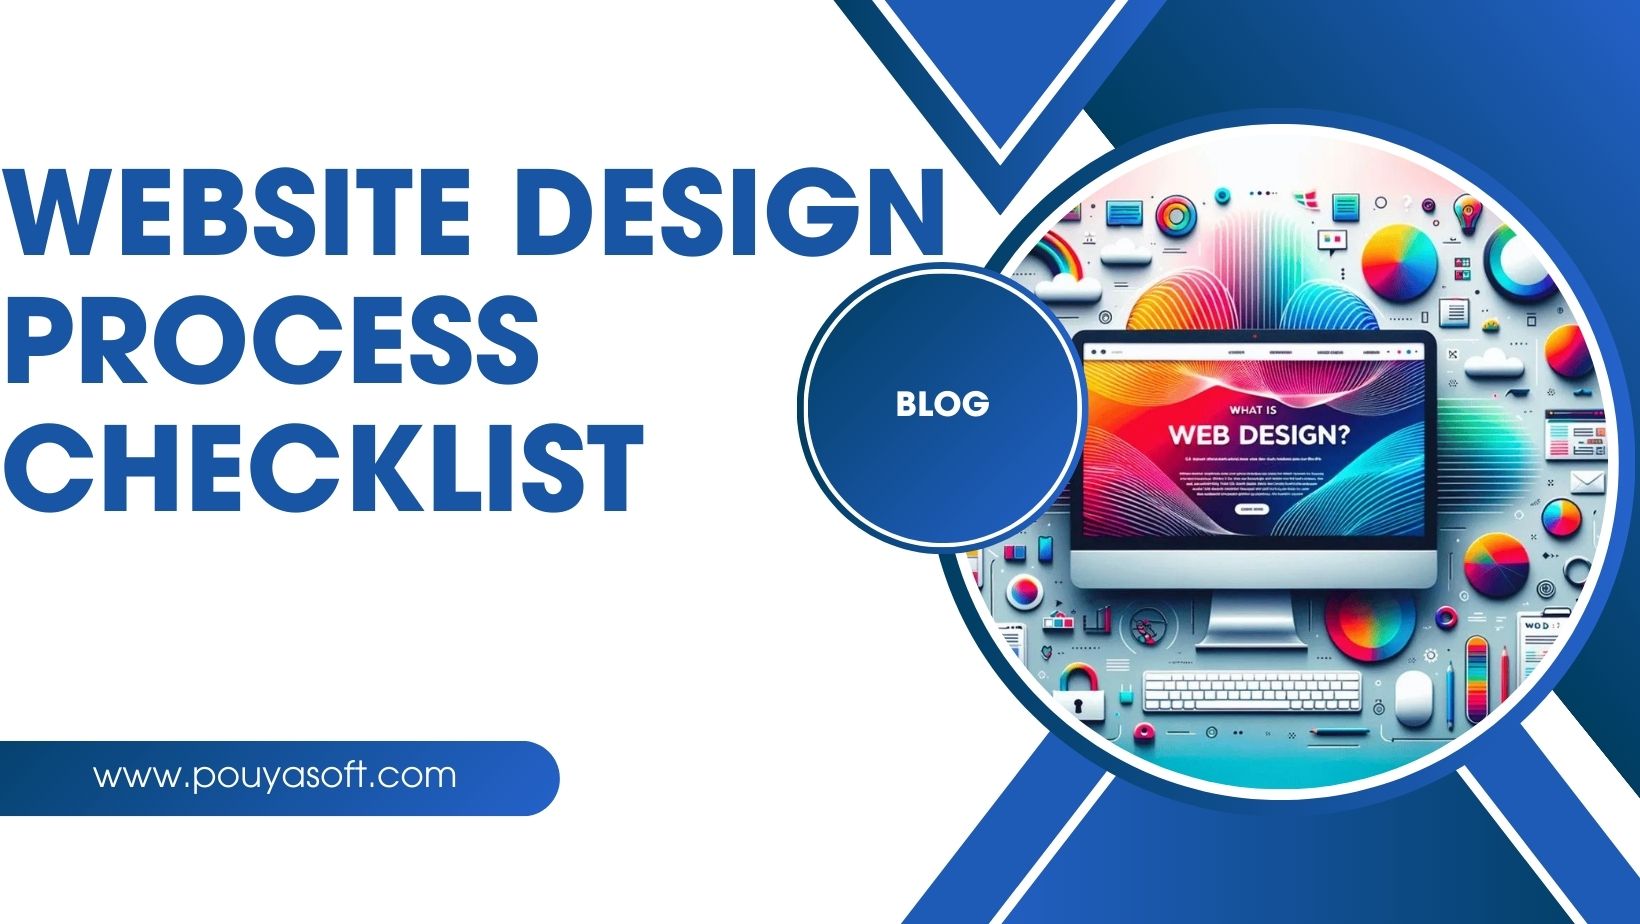 website design process checklist [9 step]